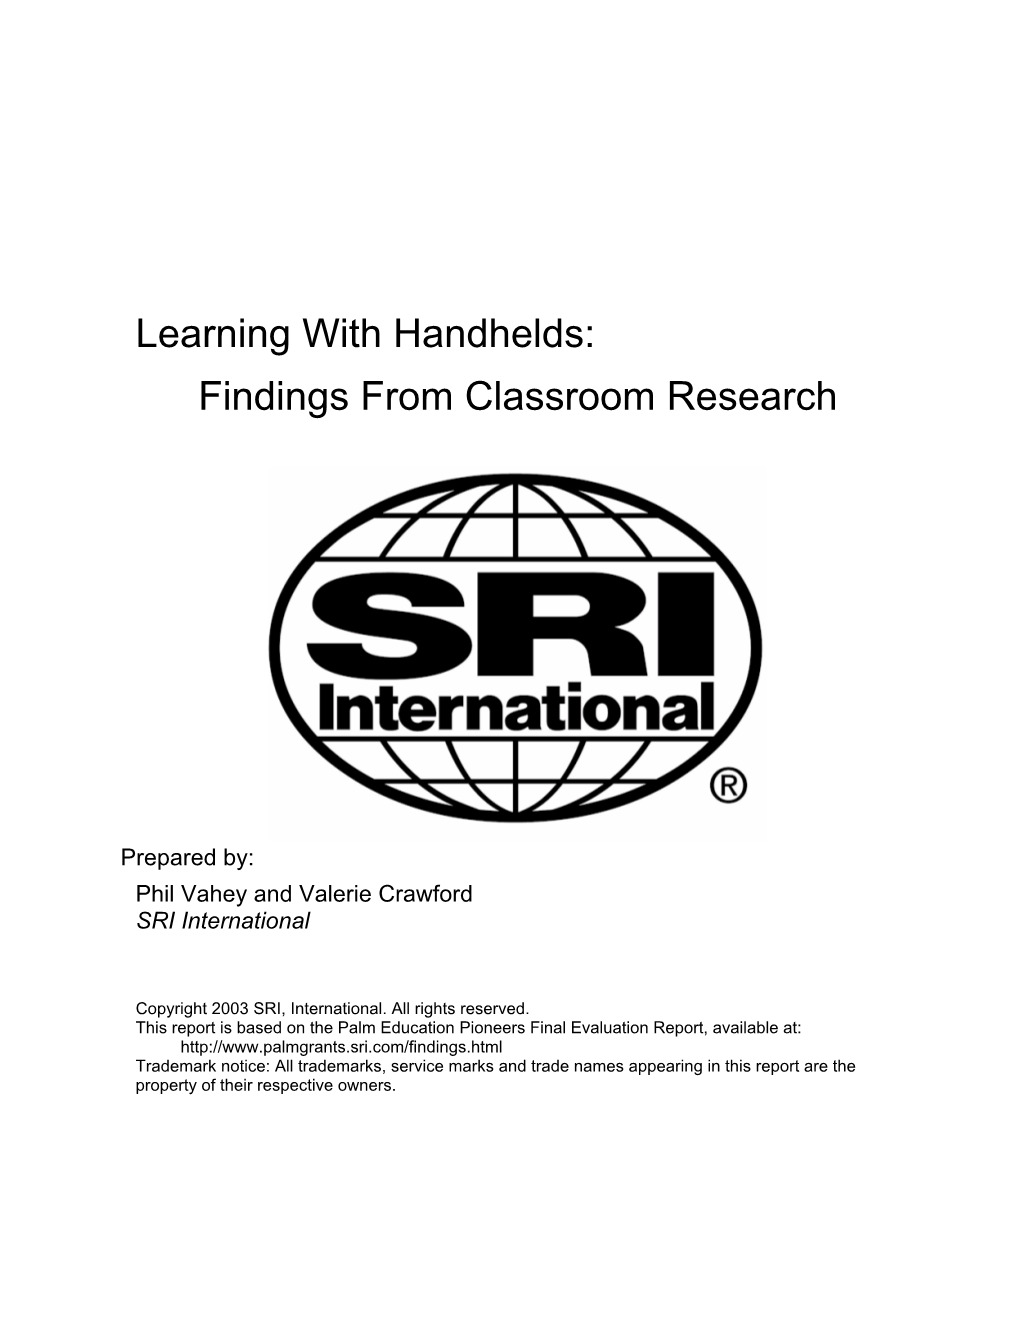 Teachers' Evaluation of Handheld Technology